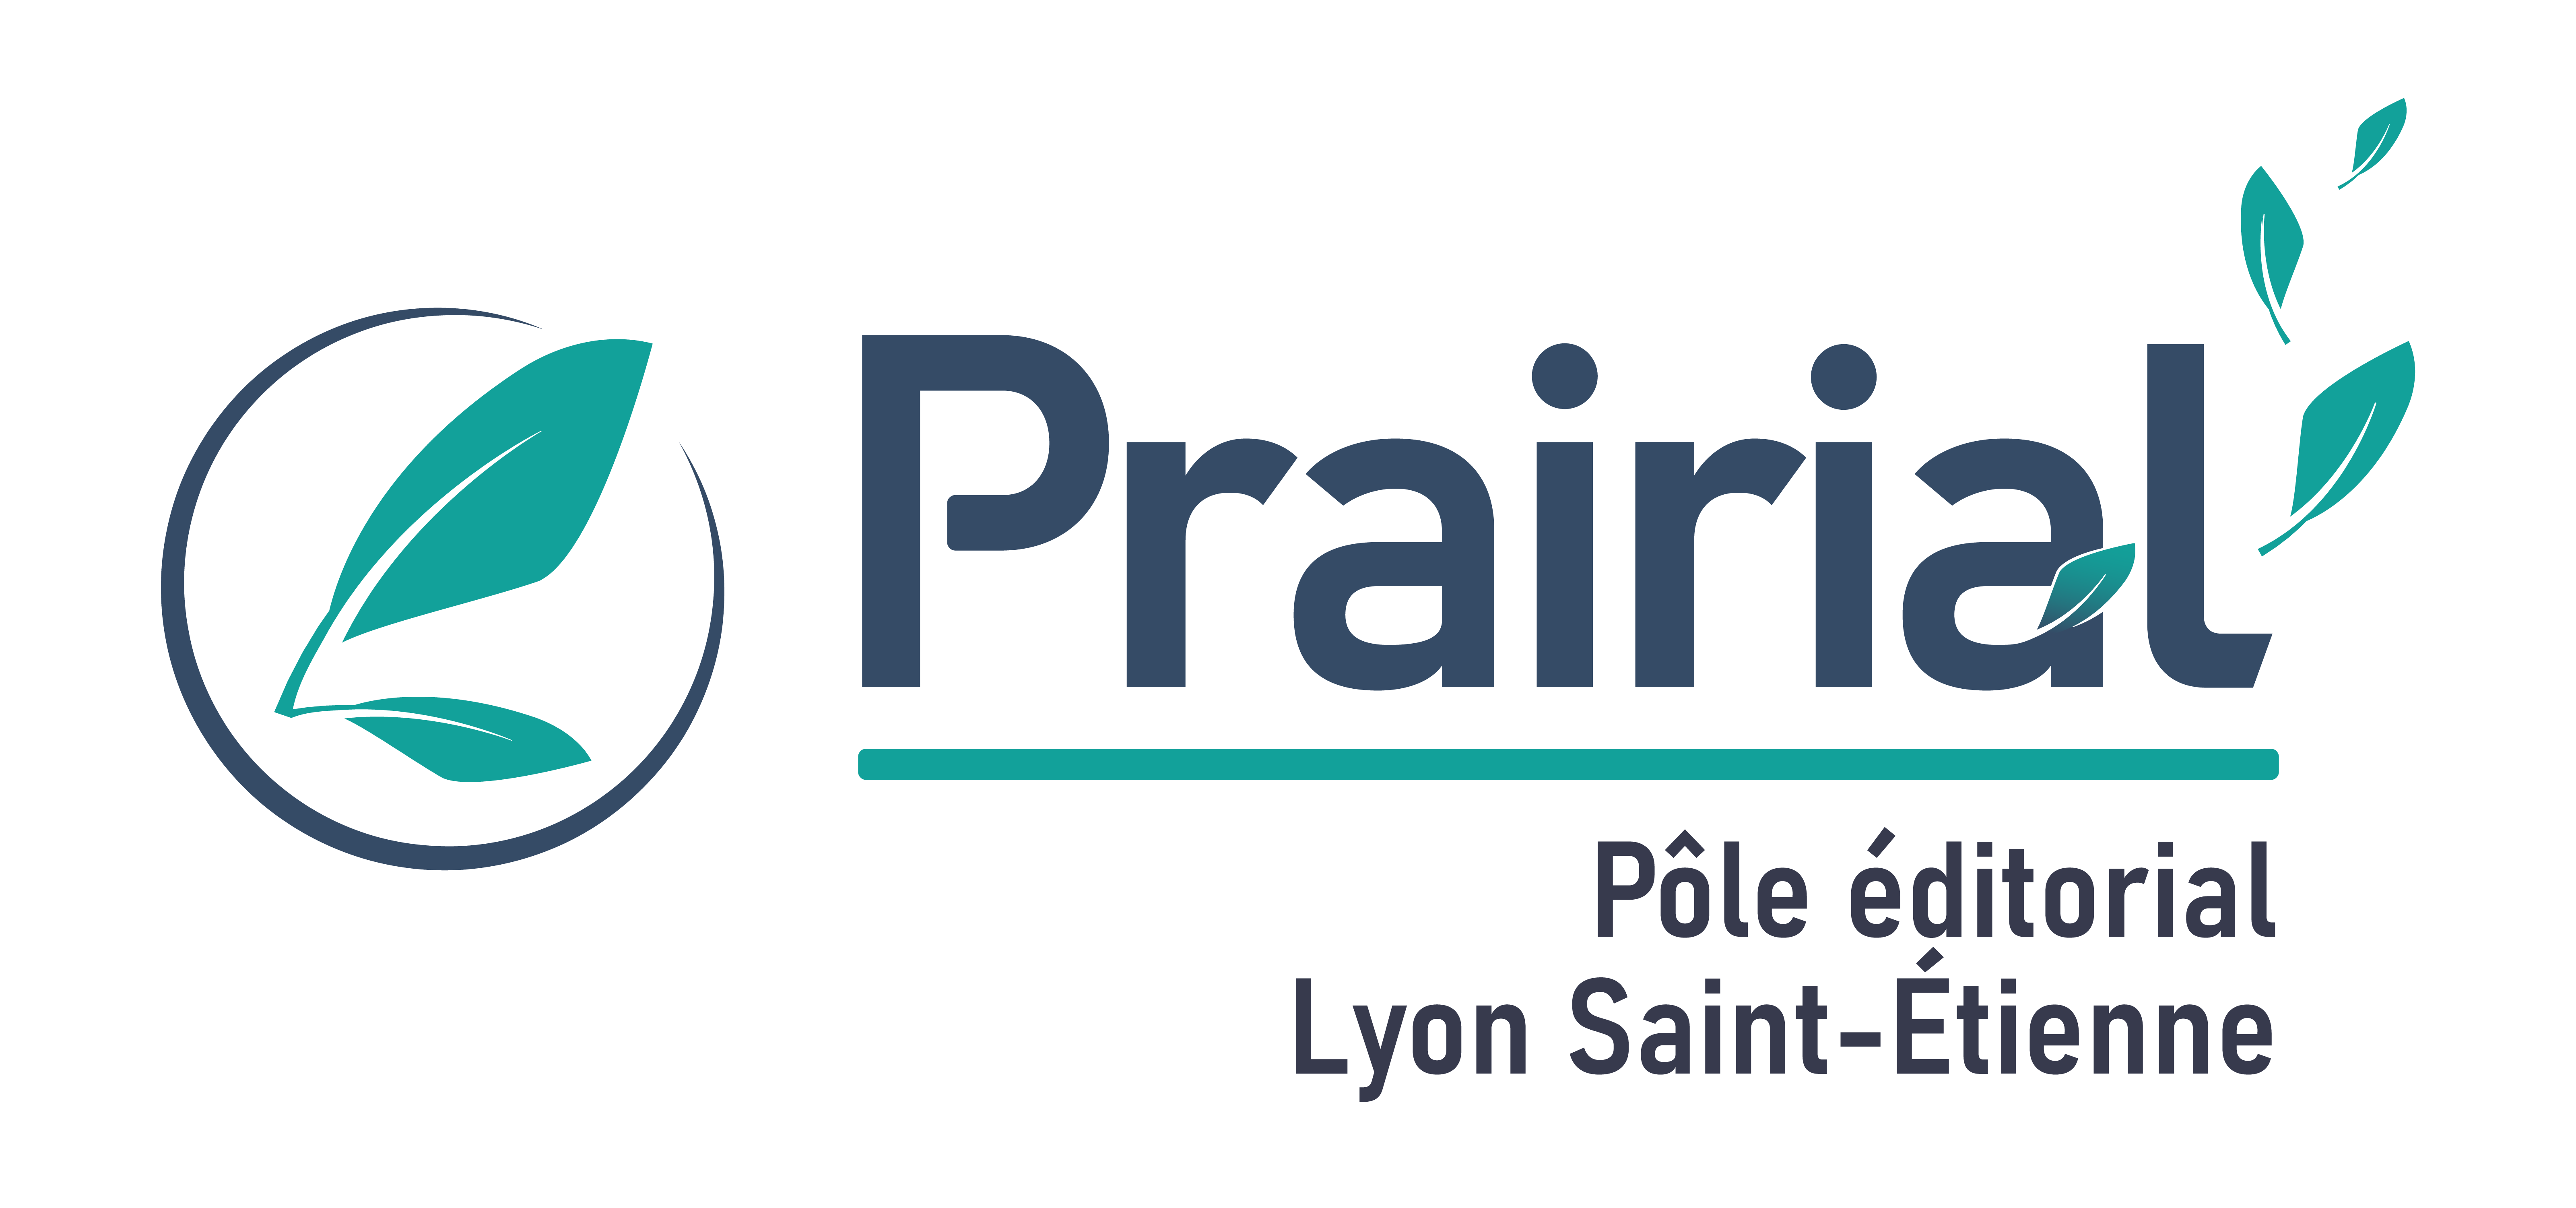 Logo Prairial: pole editorial Lyon Saint-Etienne